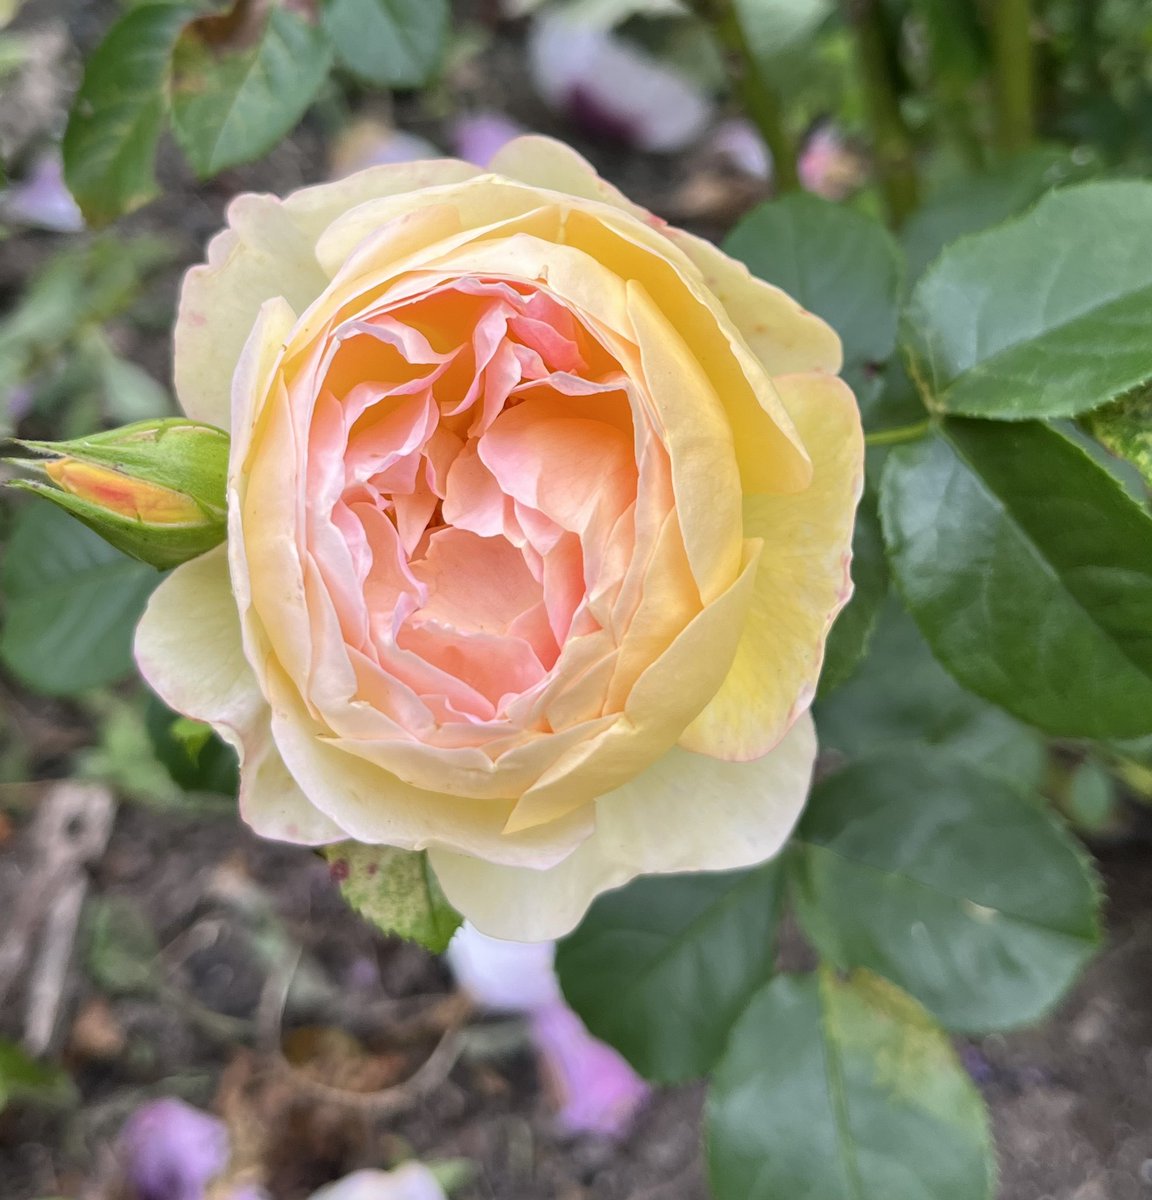 Today’s favourite rose - Belle de Jour #roseoftheyear 2021 - a good doer #roses #myroses #mygarden #GardeningTwitter